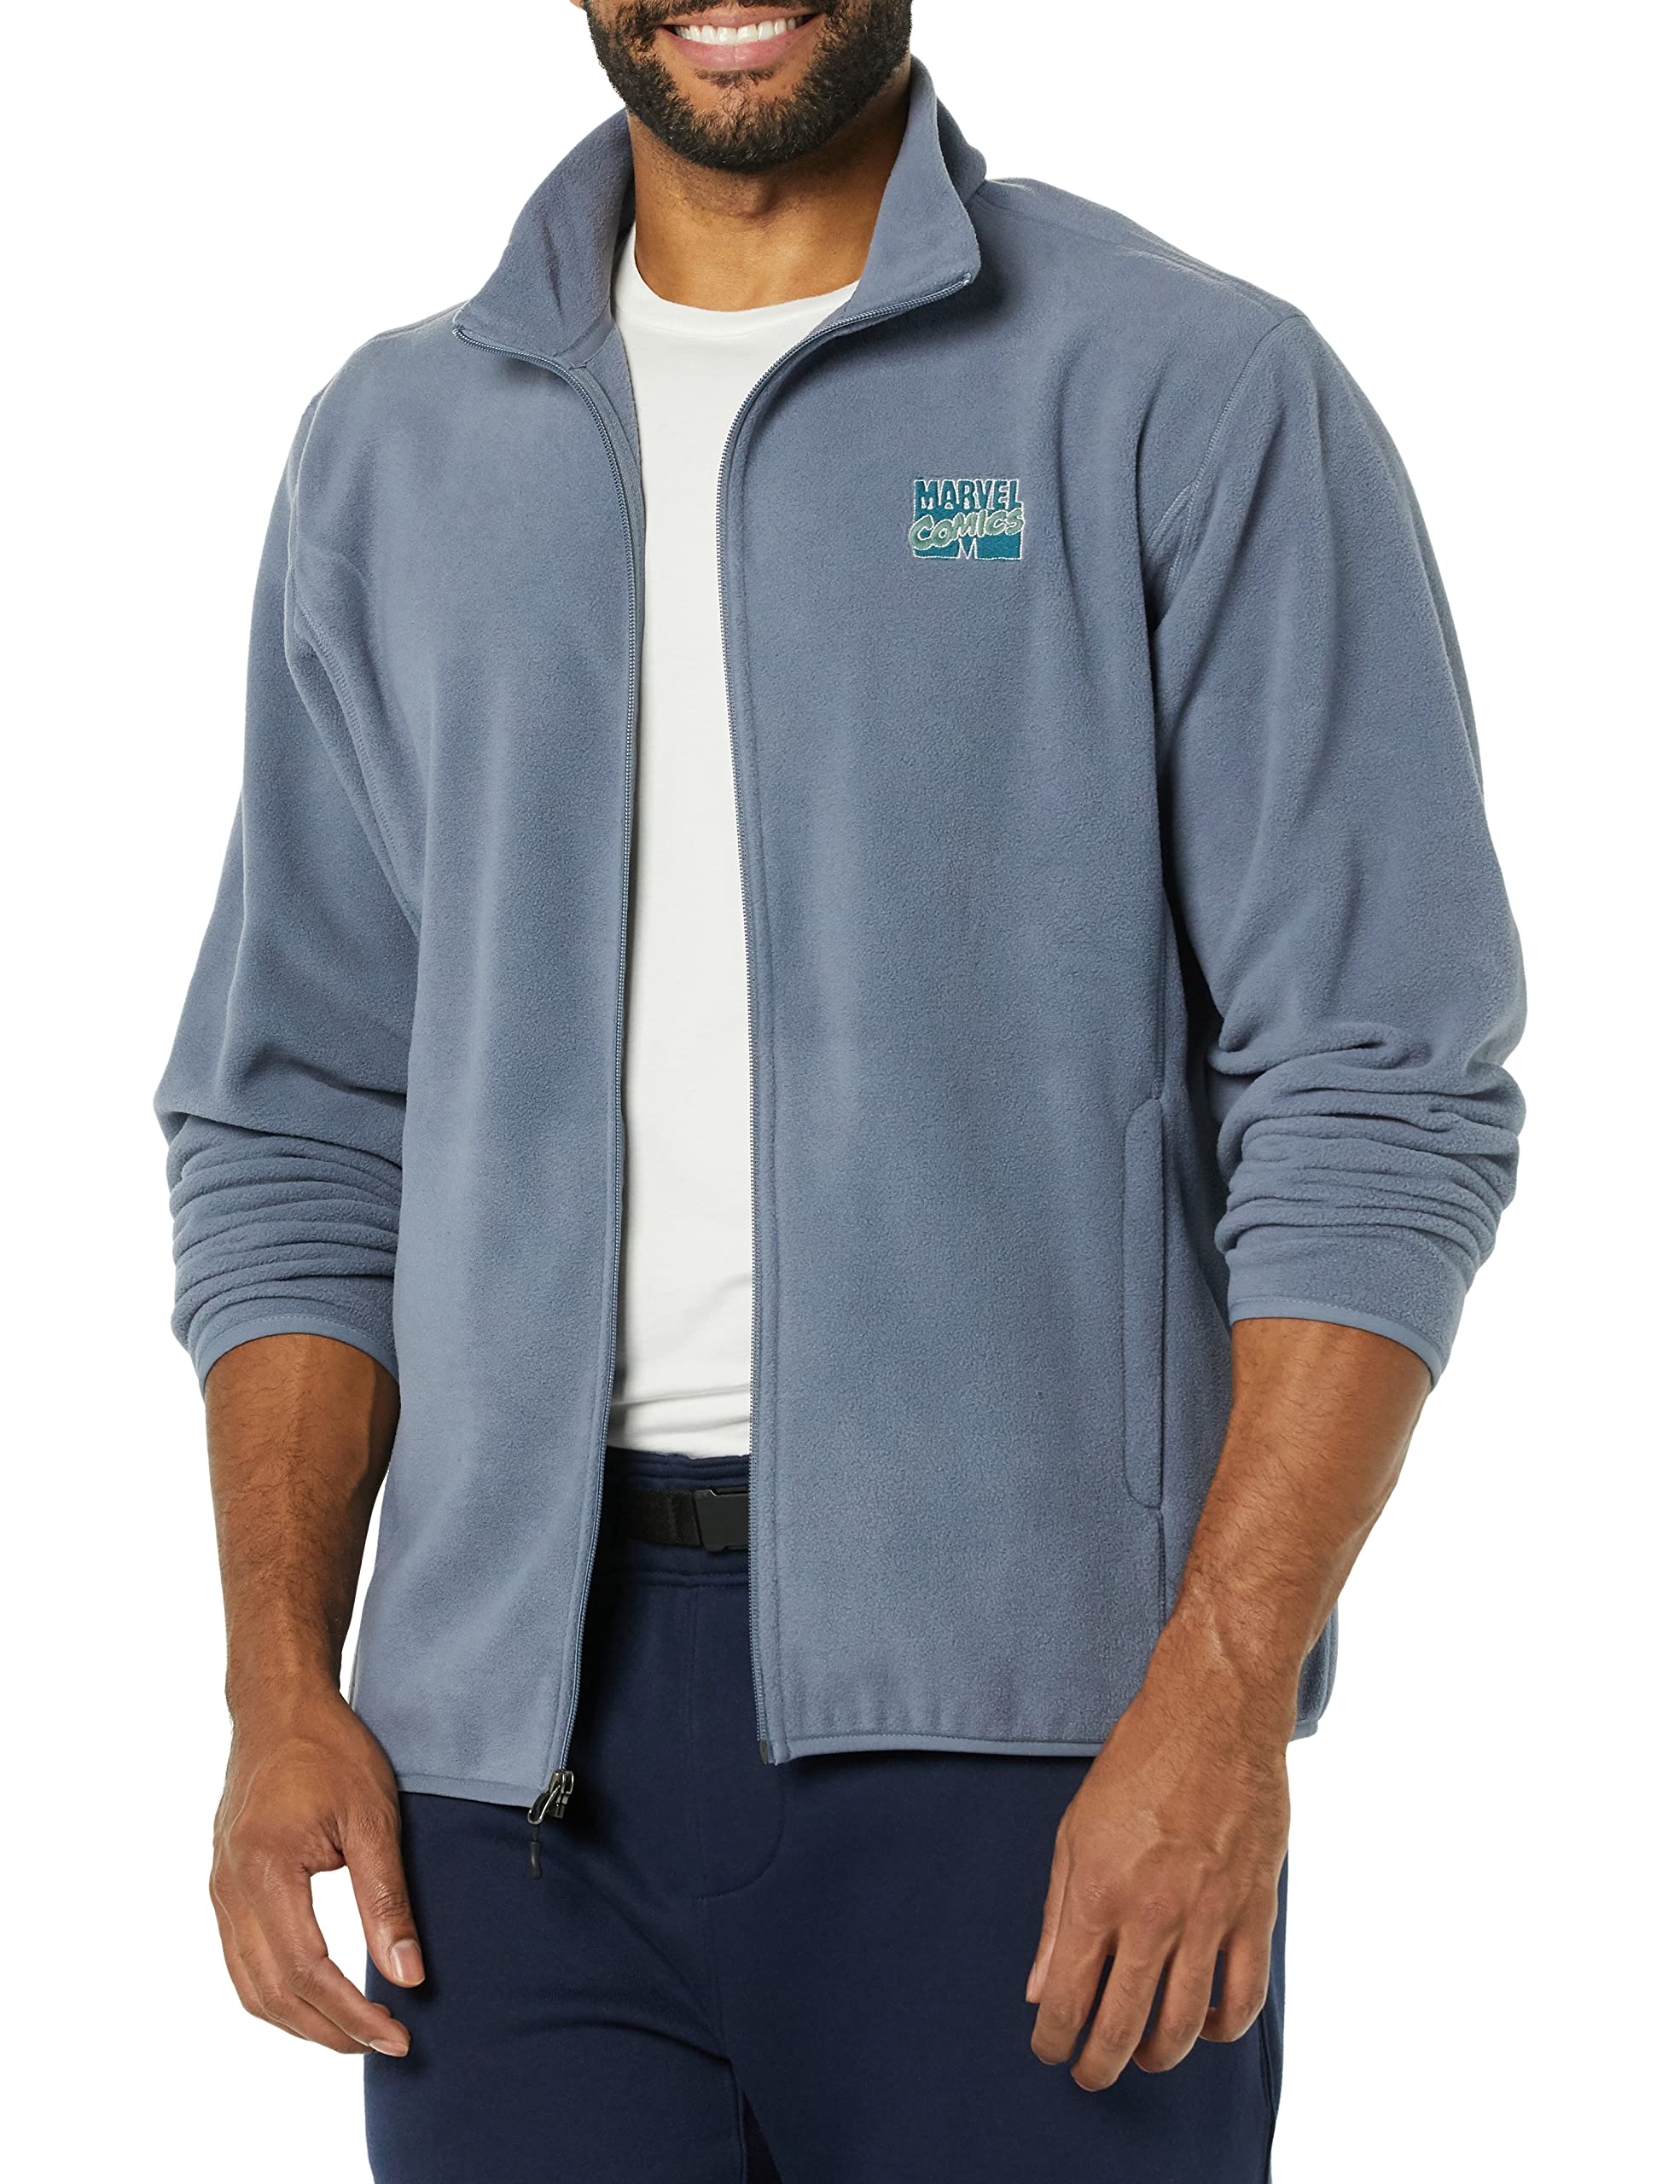 Amazon Essentials Men's Disney Full-Zip Polar Fleece Jackets (Various) $10.70 + Free Shipping w/ Prime or on $35+